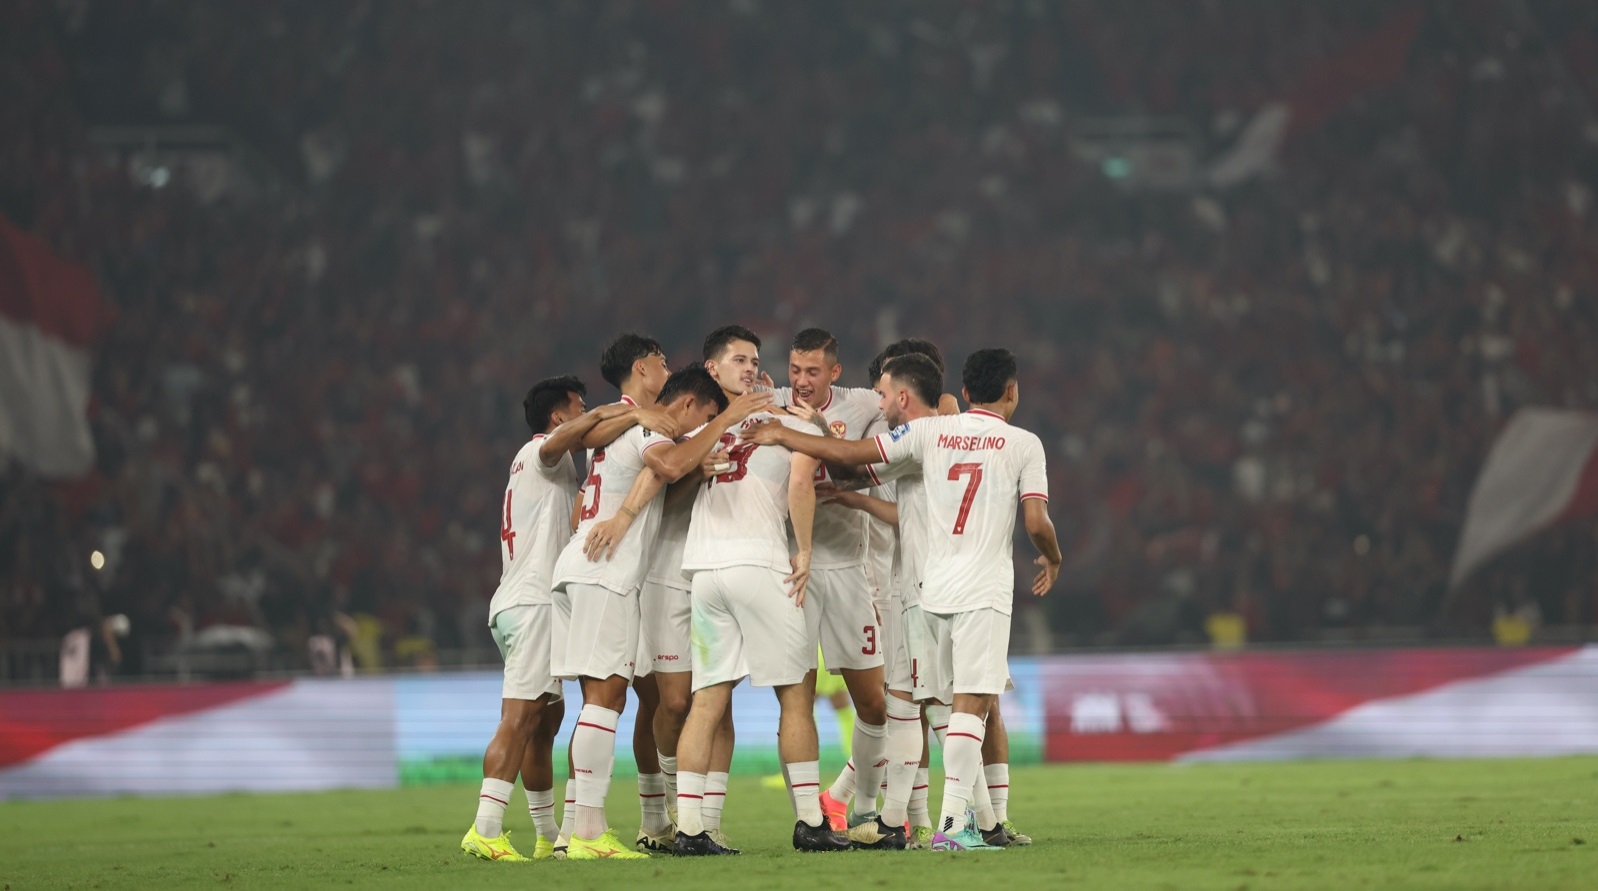 Lolos Putaran Ketiga, Inilah Jalan Panjang Timnas Indonesia ke Pentas Piala Dunia 2026